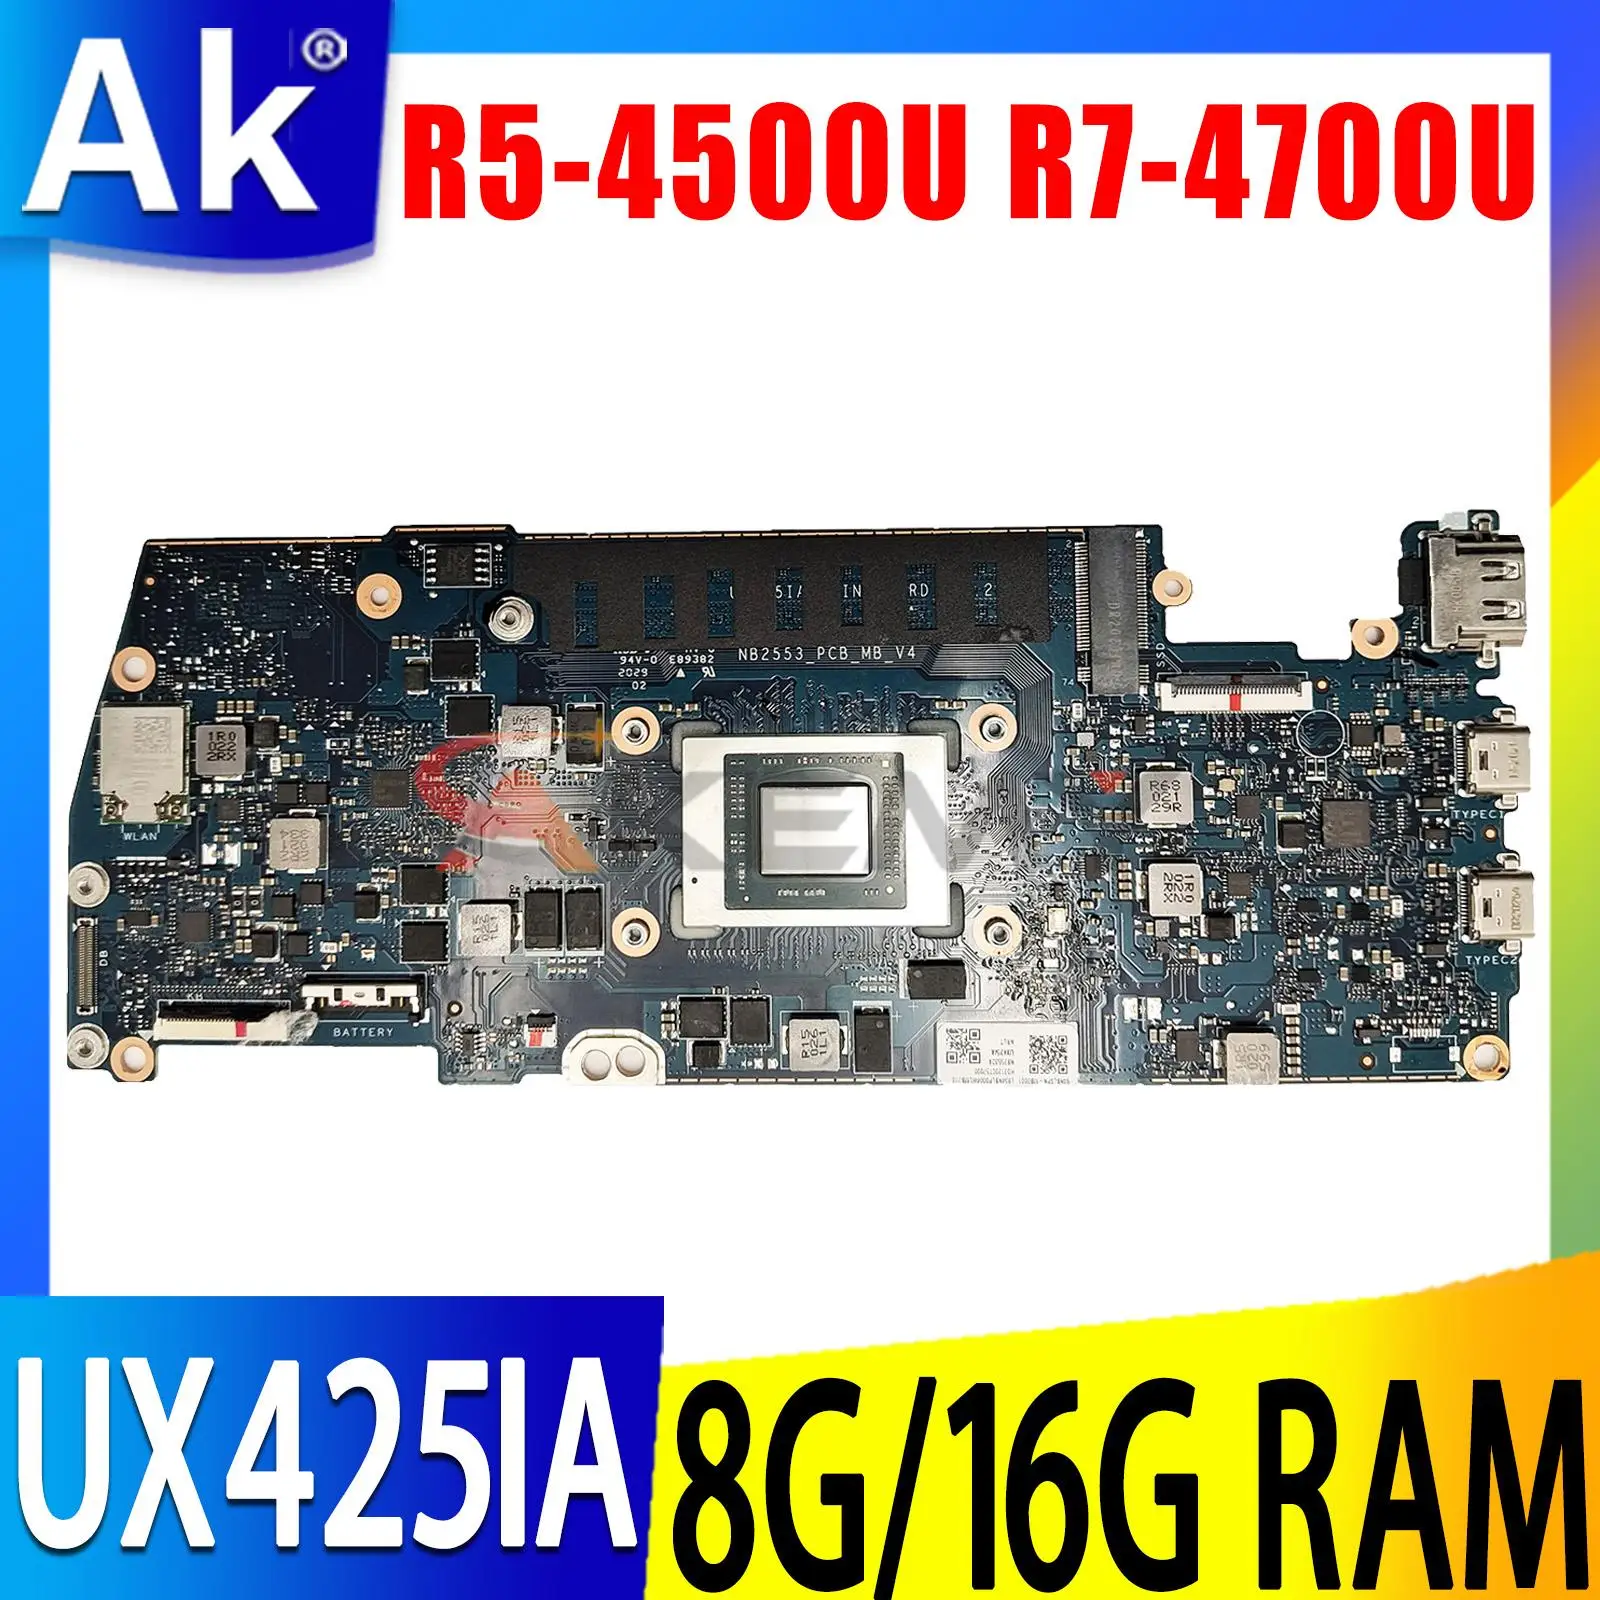 

UX425IA Motherboard For ASUS ZenBook UX425 UX425IA UX425I UM425IA Laptop Mainboard With R5-4500U R7-4700U 8GB 16GB RAM